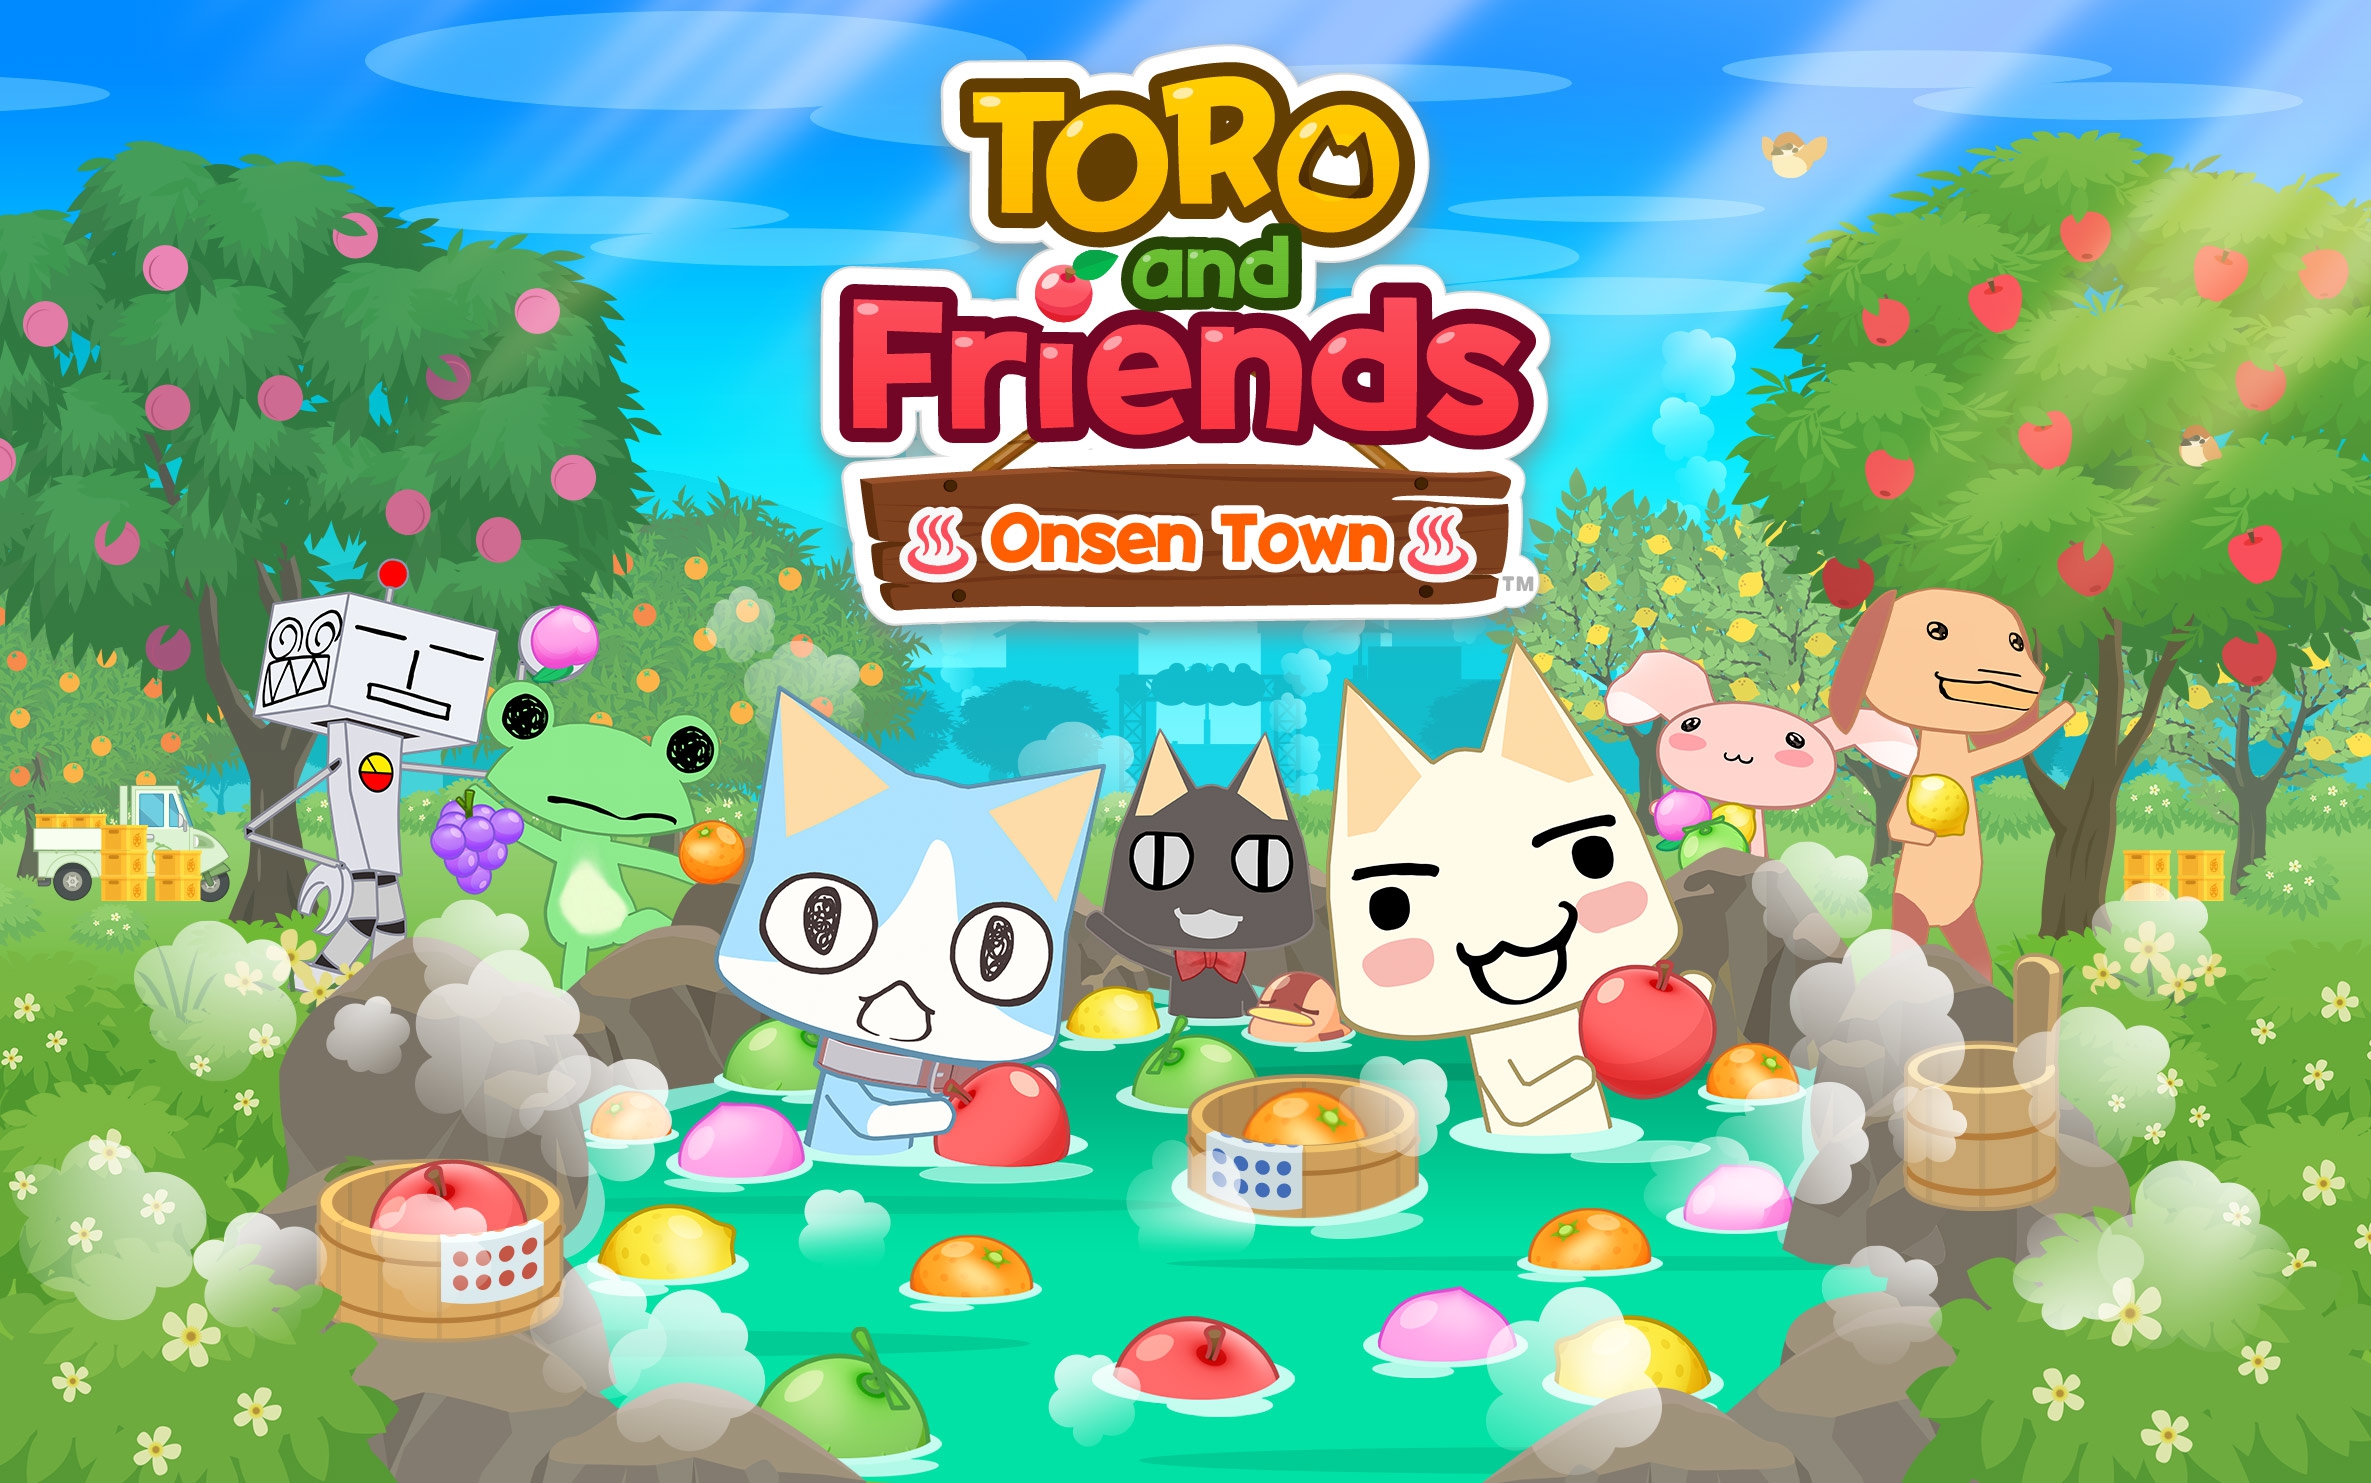 Demo demo issyo. Toro and friends игра. Toro Иноуэ. Торо котик игра. Toro and friends Onsen Town.